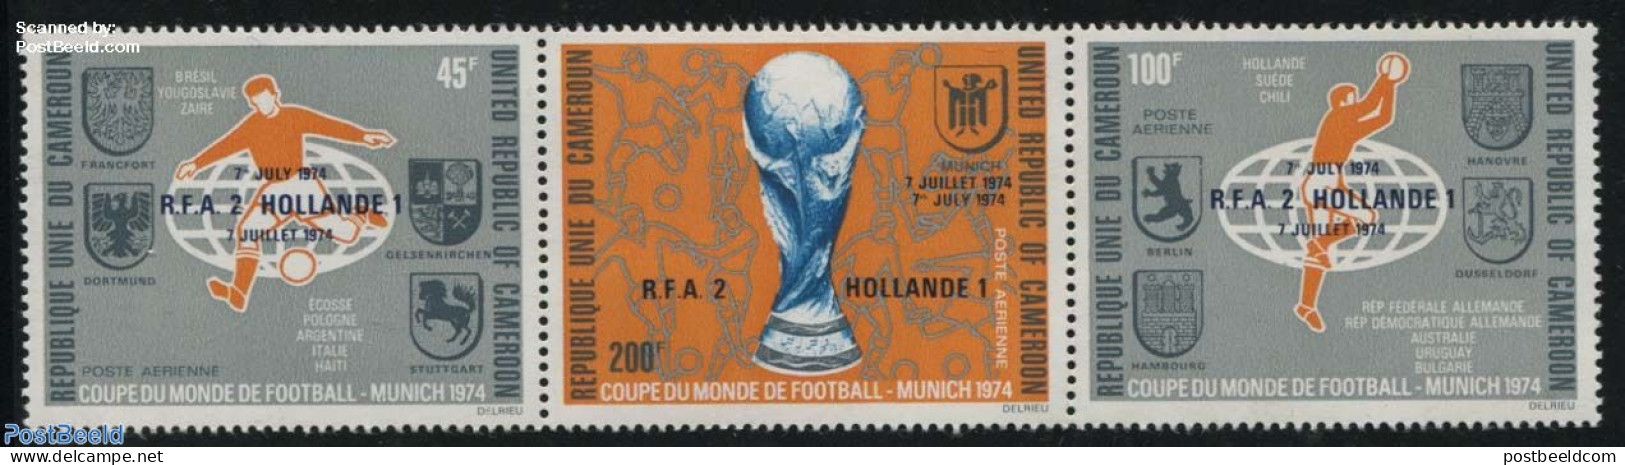 Cameroon 1974 Football Winners 3v [::], Mint NH, History - Sport - Netherlands & Dutch - Football - Geografia